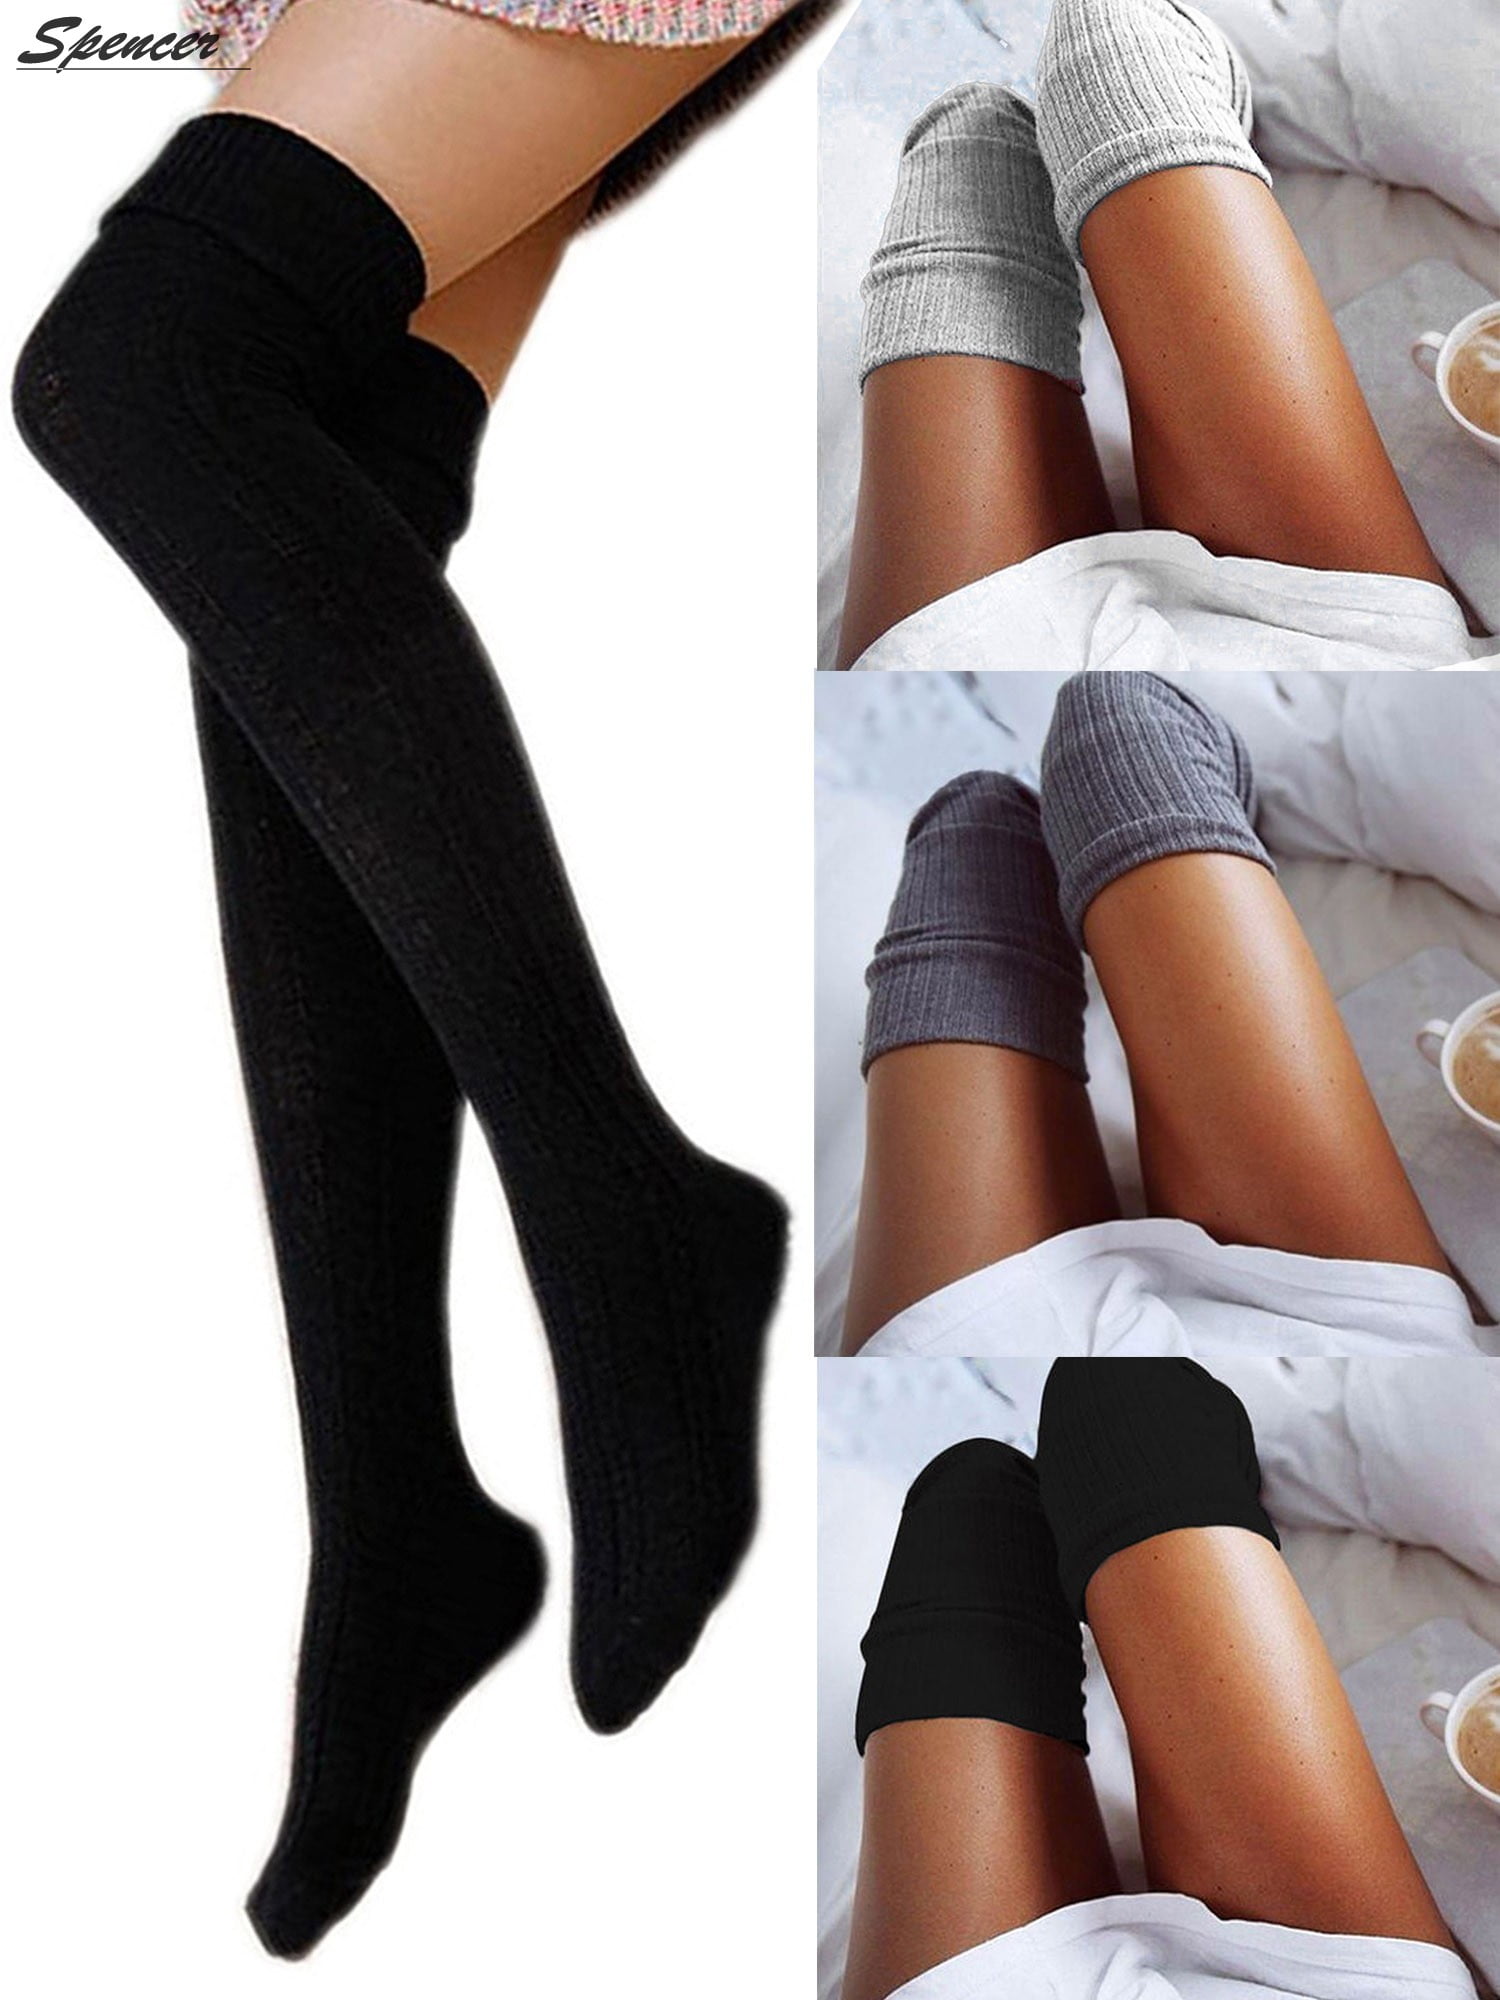 Thigh High Long Socks for Women Teens Girls Hospital Nurse School/College Leggings Stockings Italian Irish American Shamrock Over Knee Leg Warmer Boot Stockings